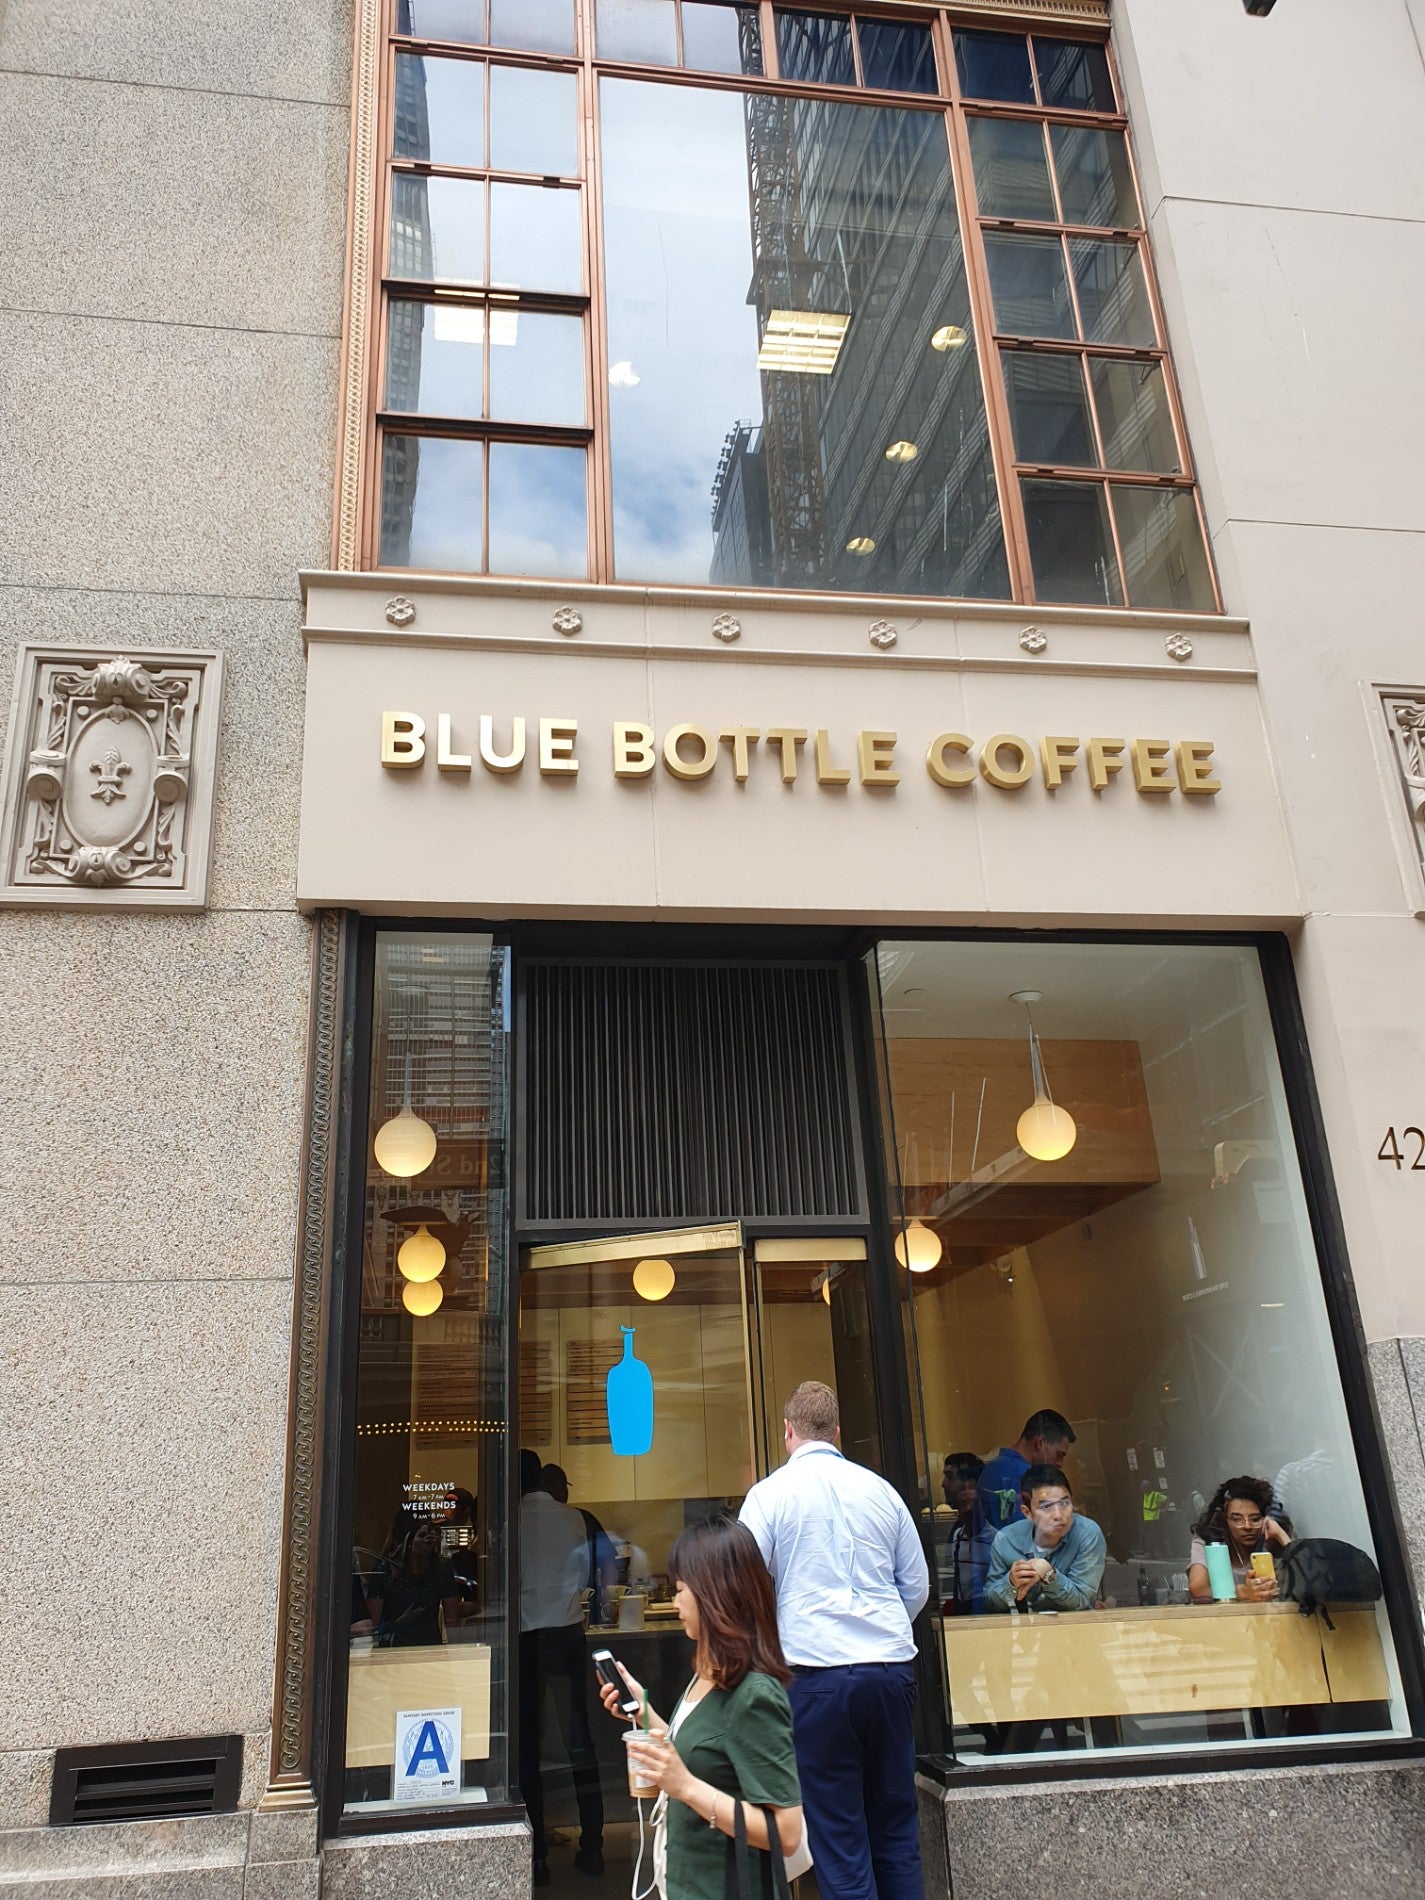 BLUE BOTTLE COFFEE - 408 Greenwich St, New York, New York - Coffee & Tea -  Phone Number - Yelp